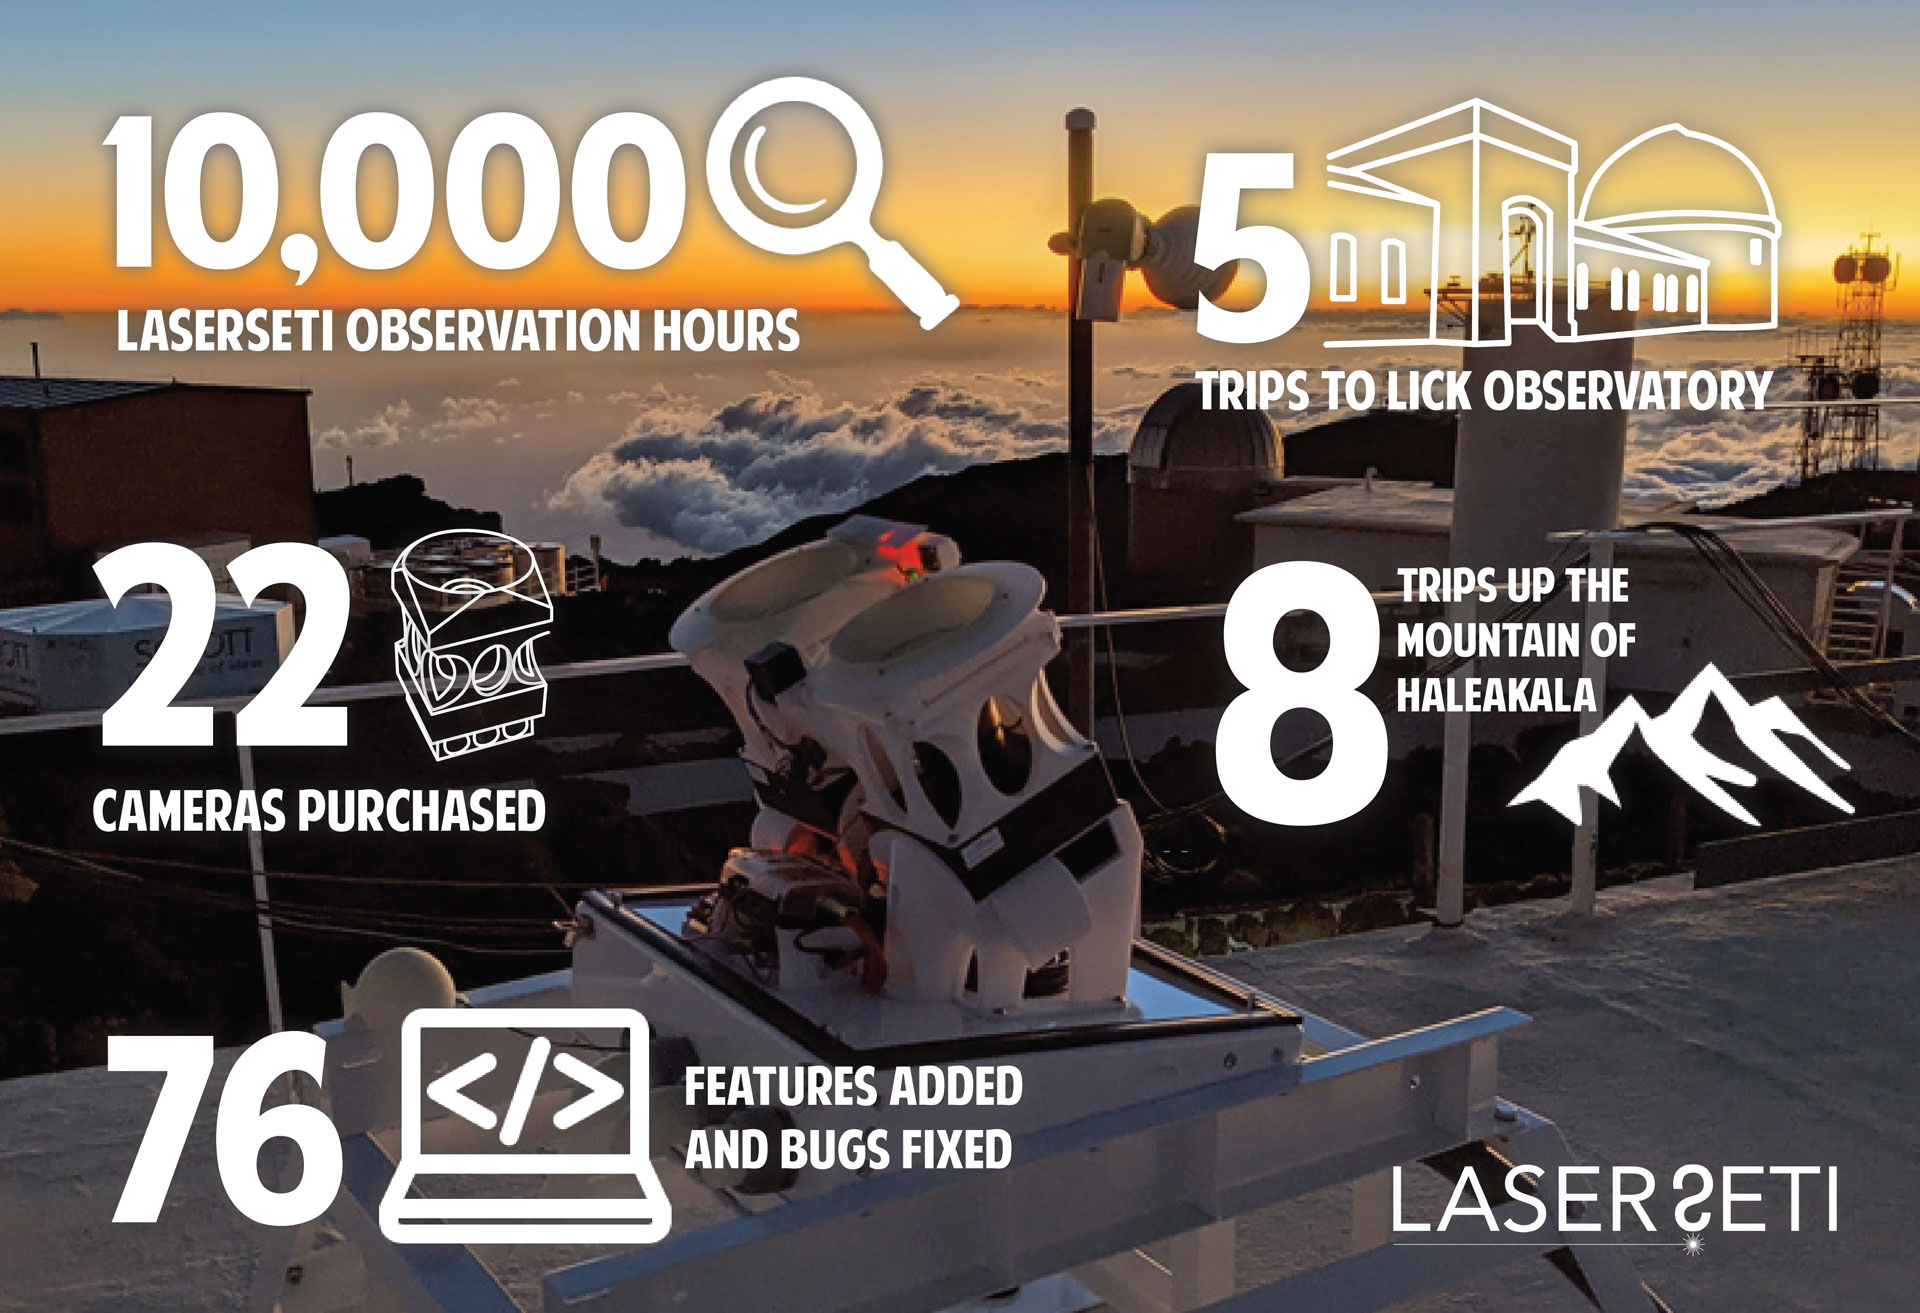 LaserSETI info graphic